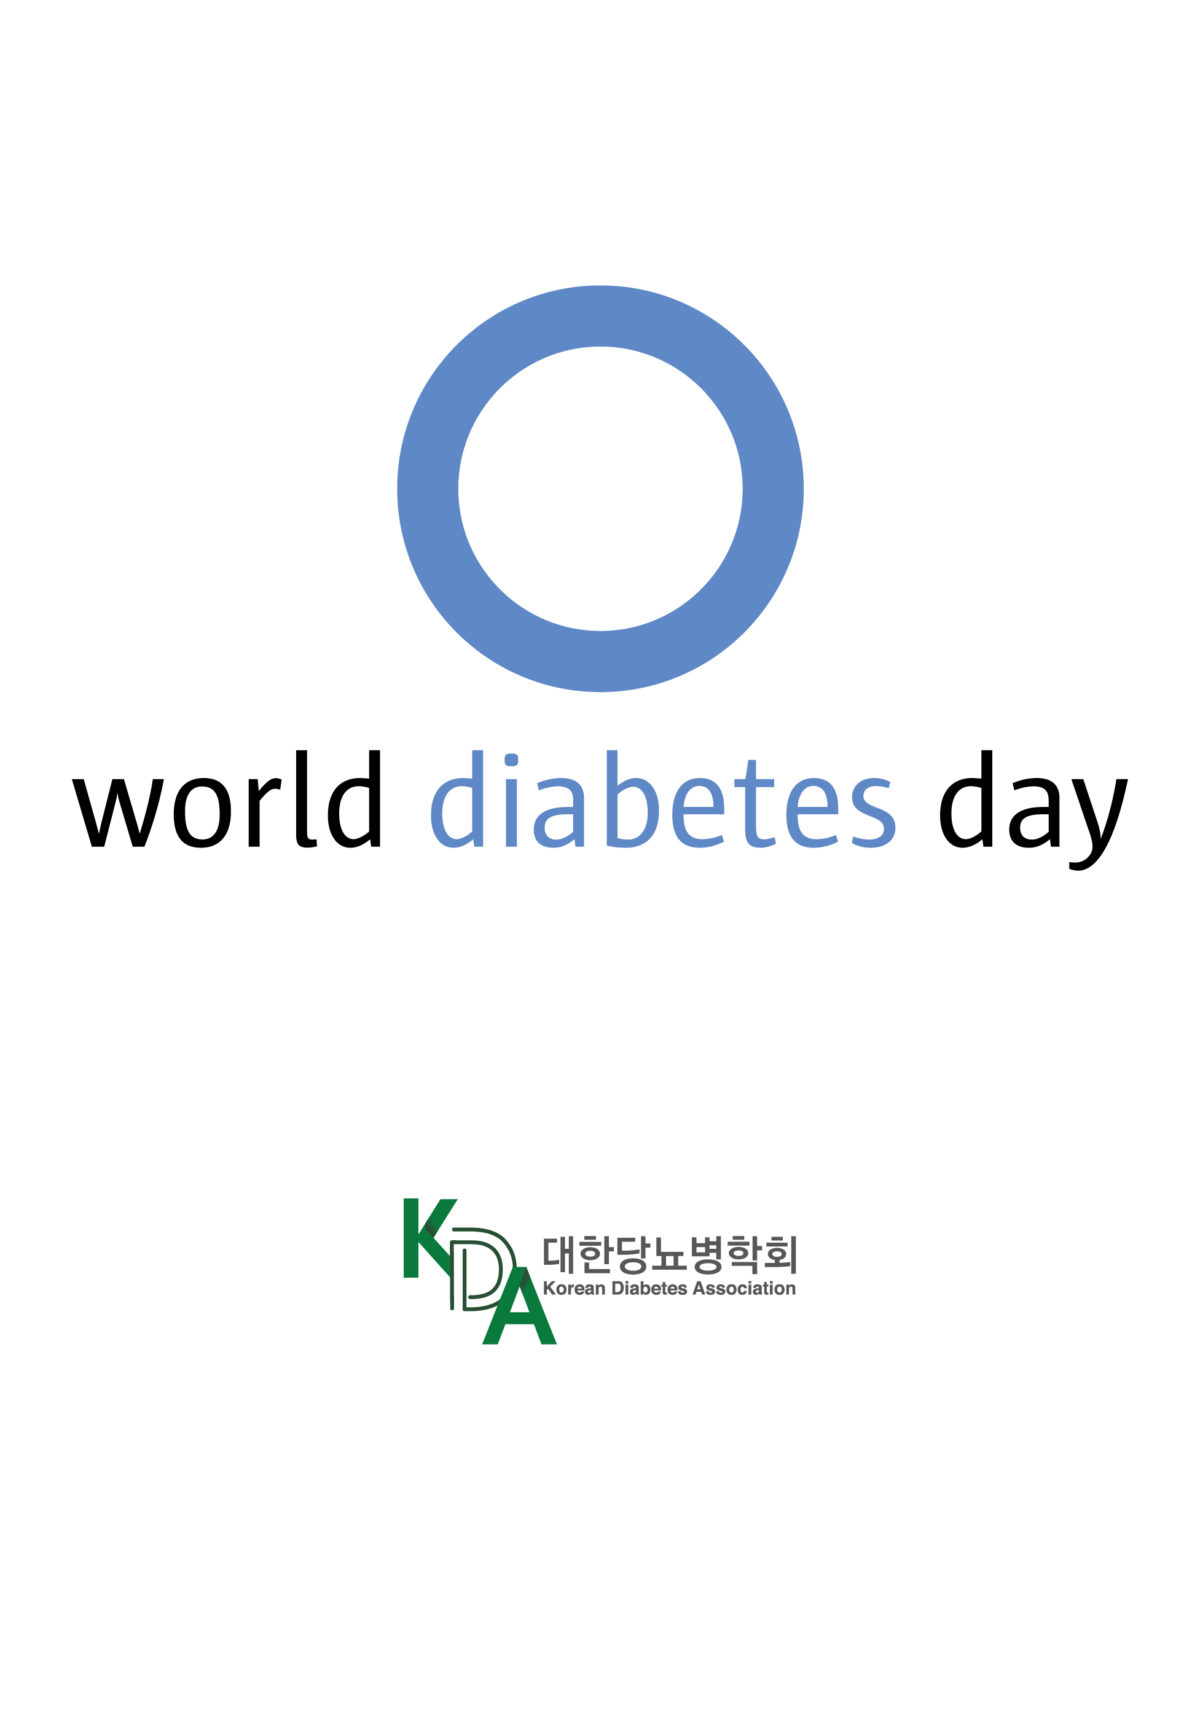 World Diabetes Day 2020